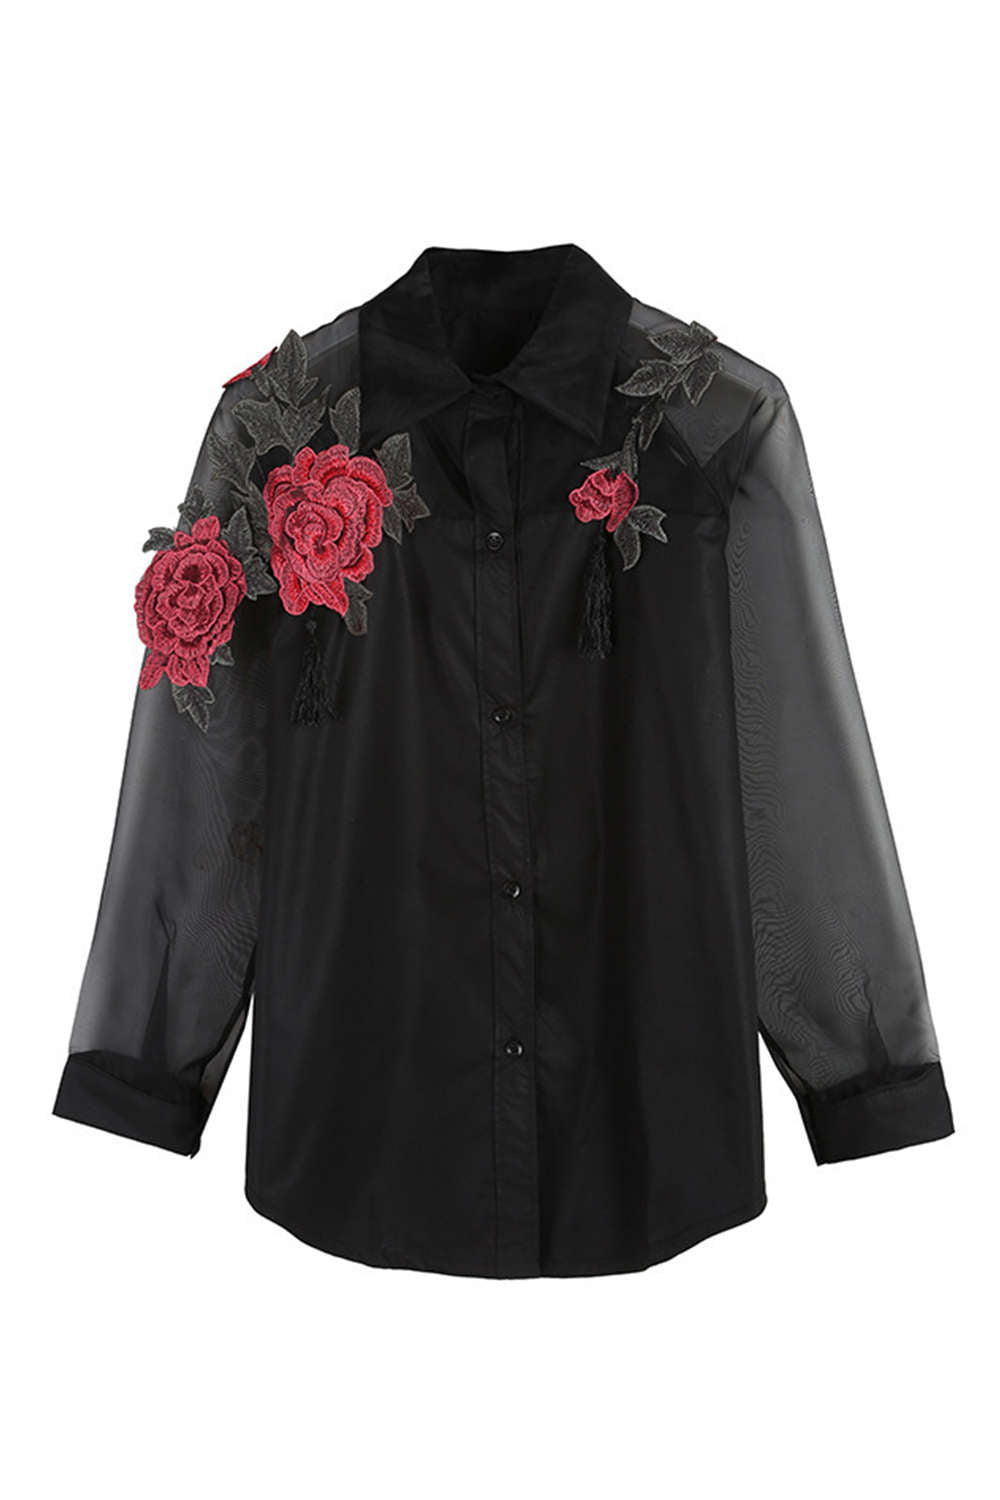 Iyasson Organza Splicing Floral Embroidery Shirt